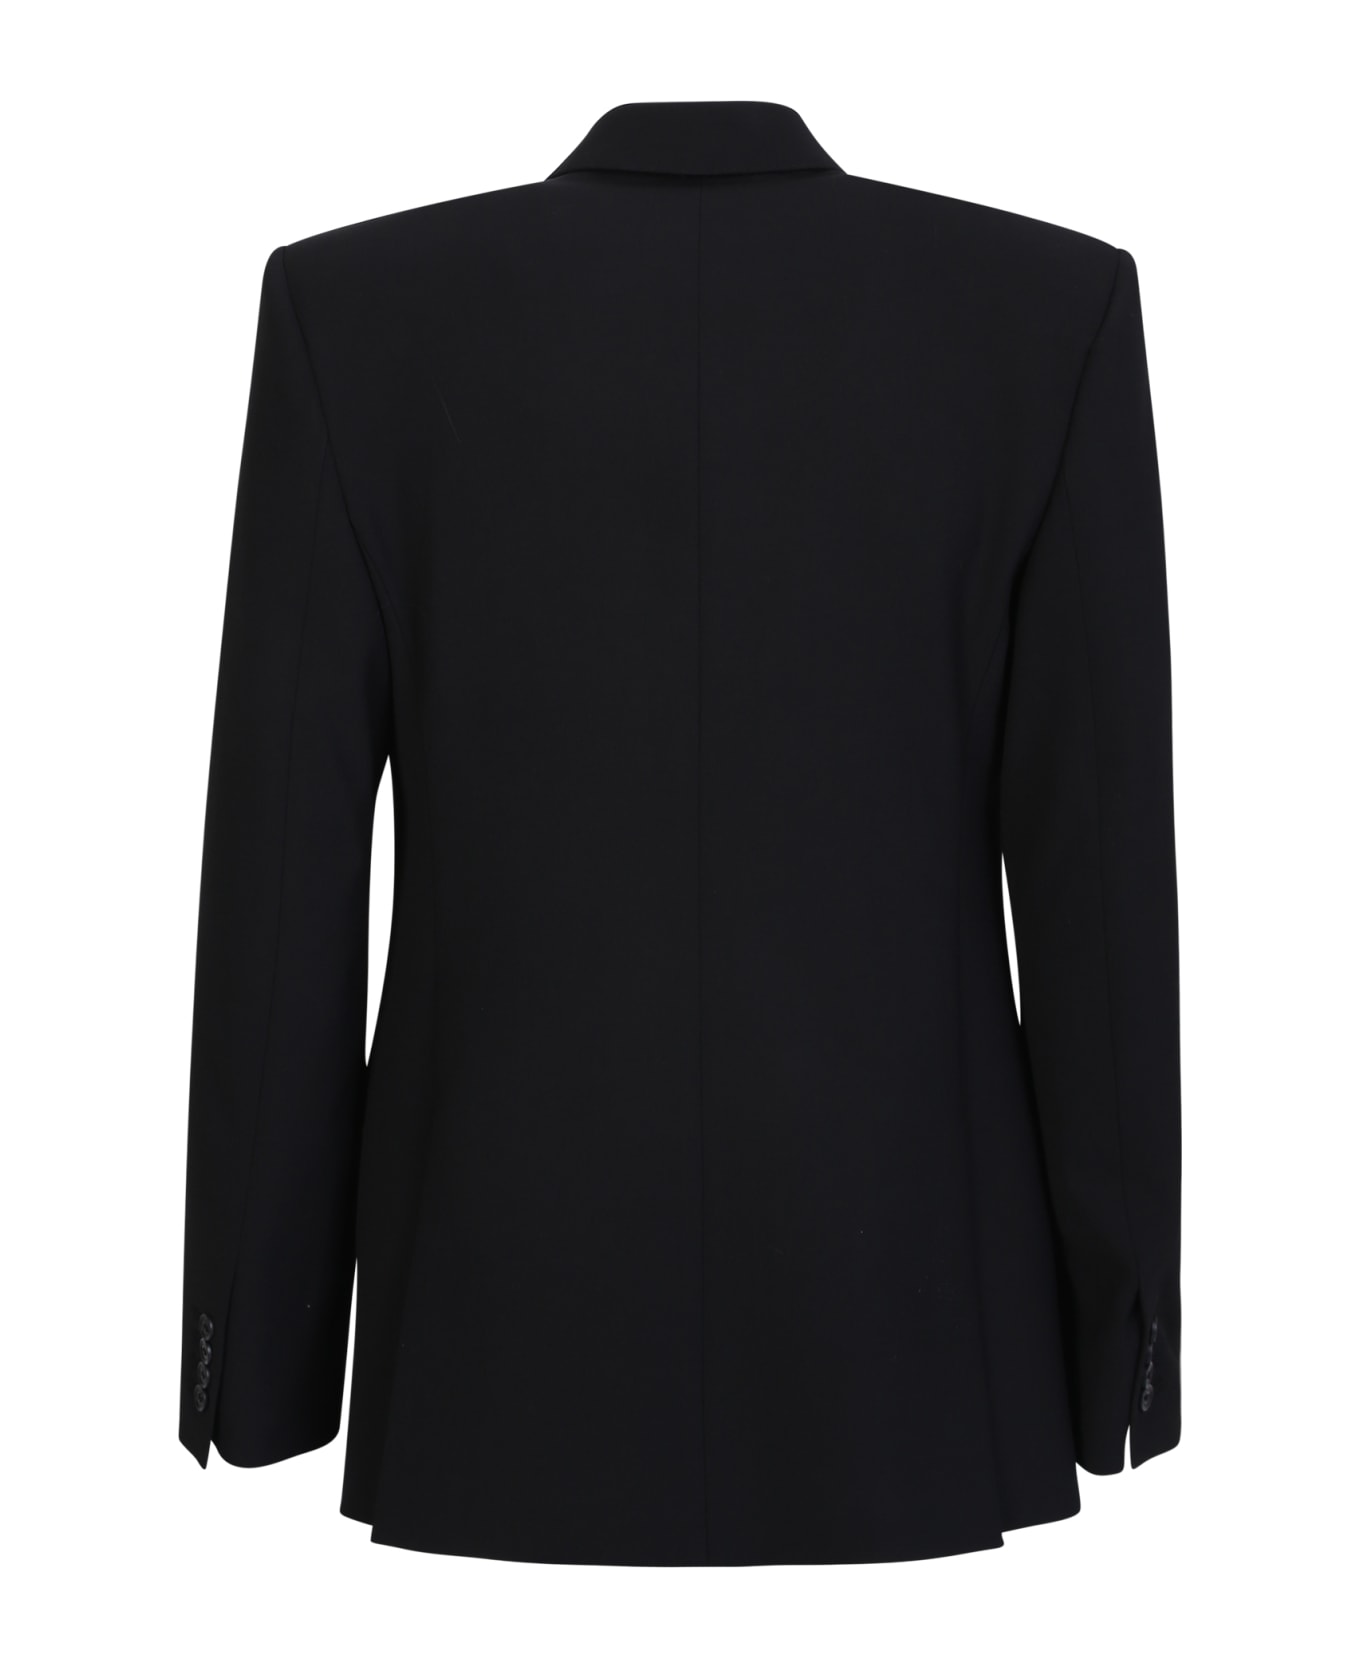 Balenciaga Black Tailored Jacket - Black